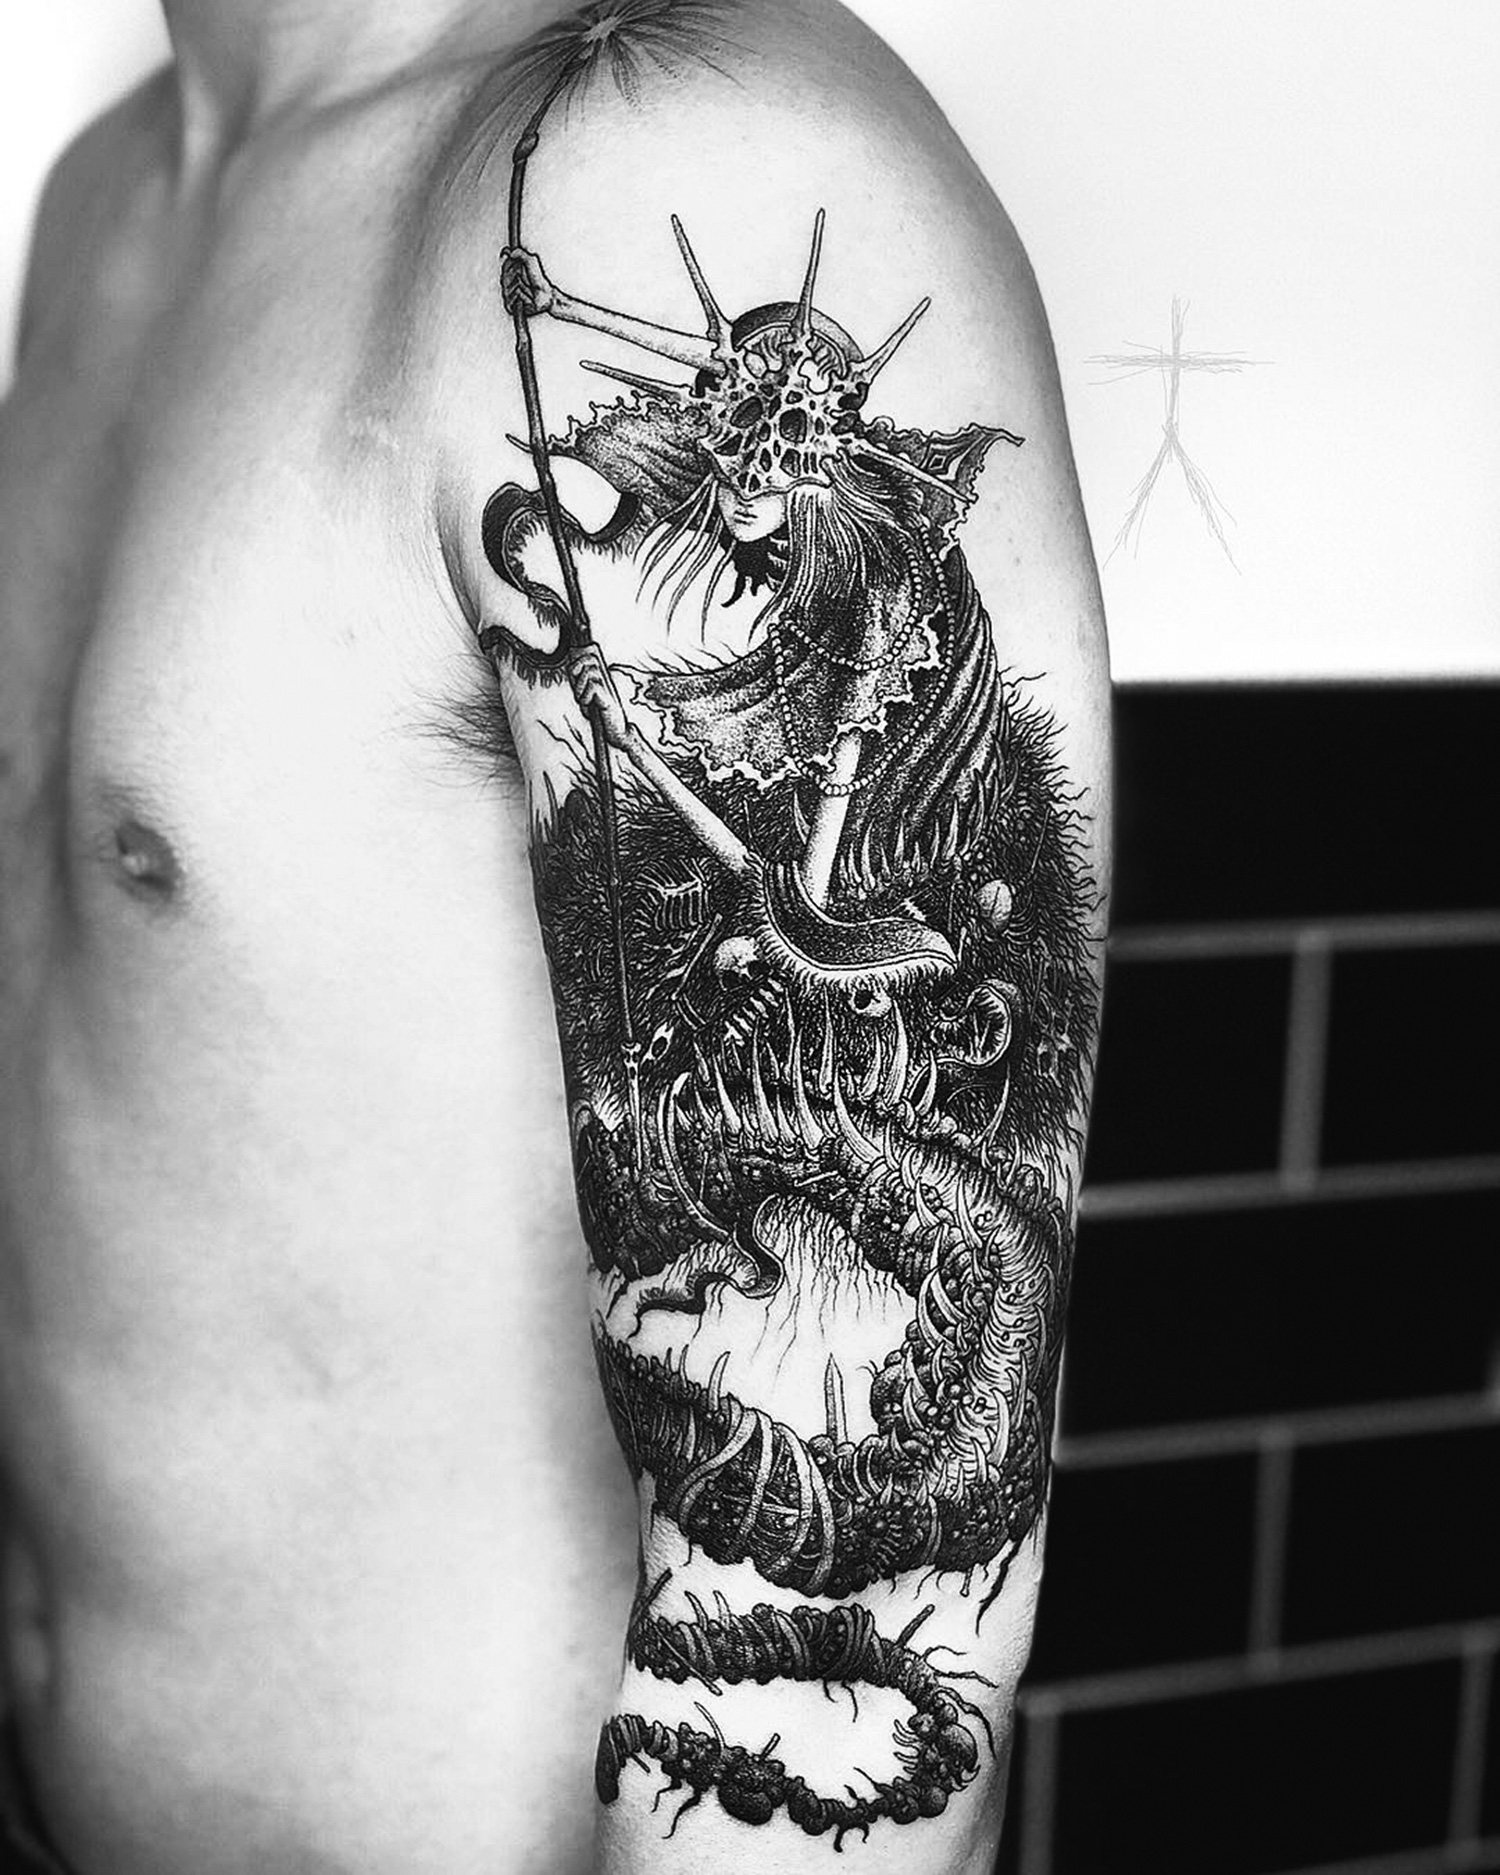 Christopher Jade tattoo - creature